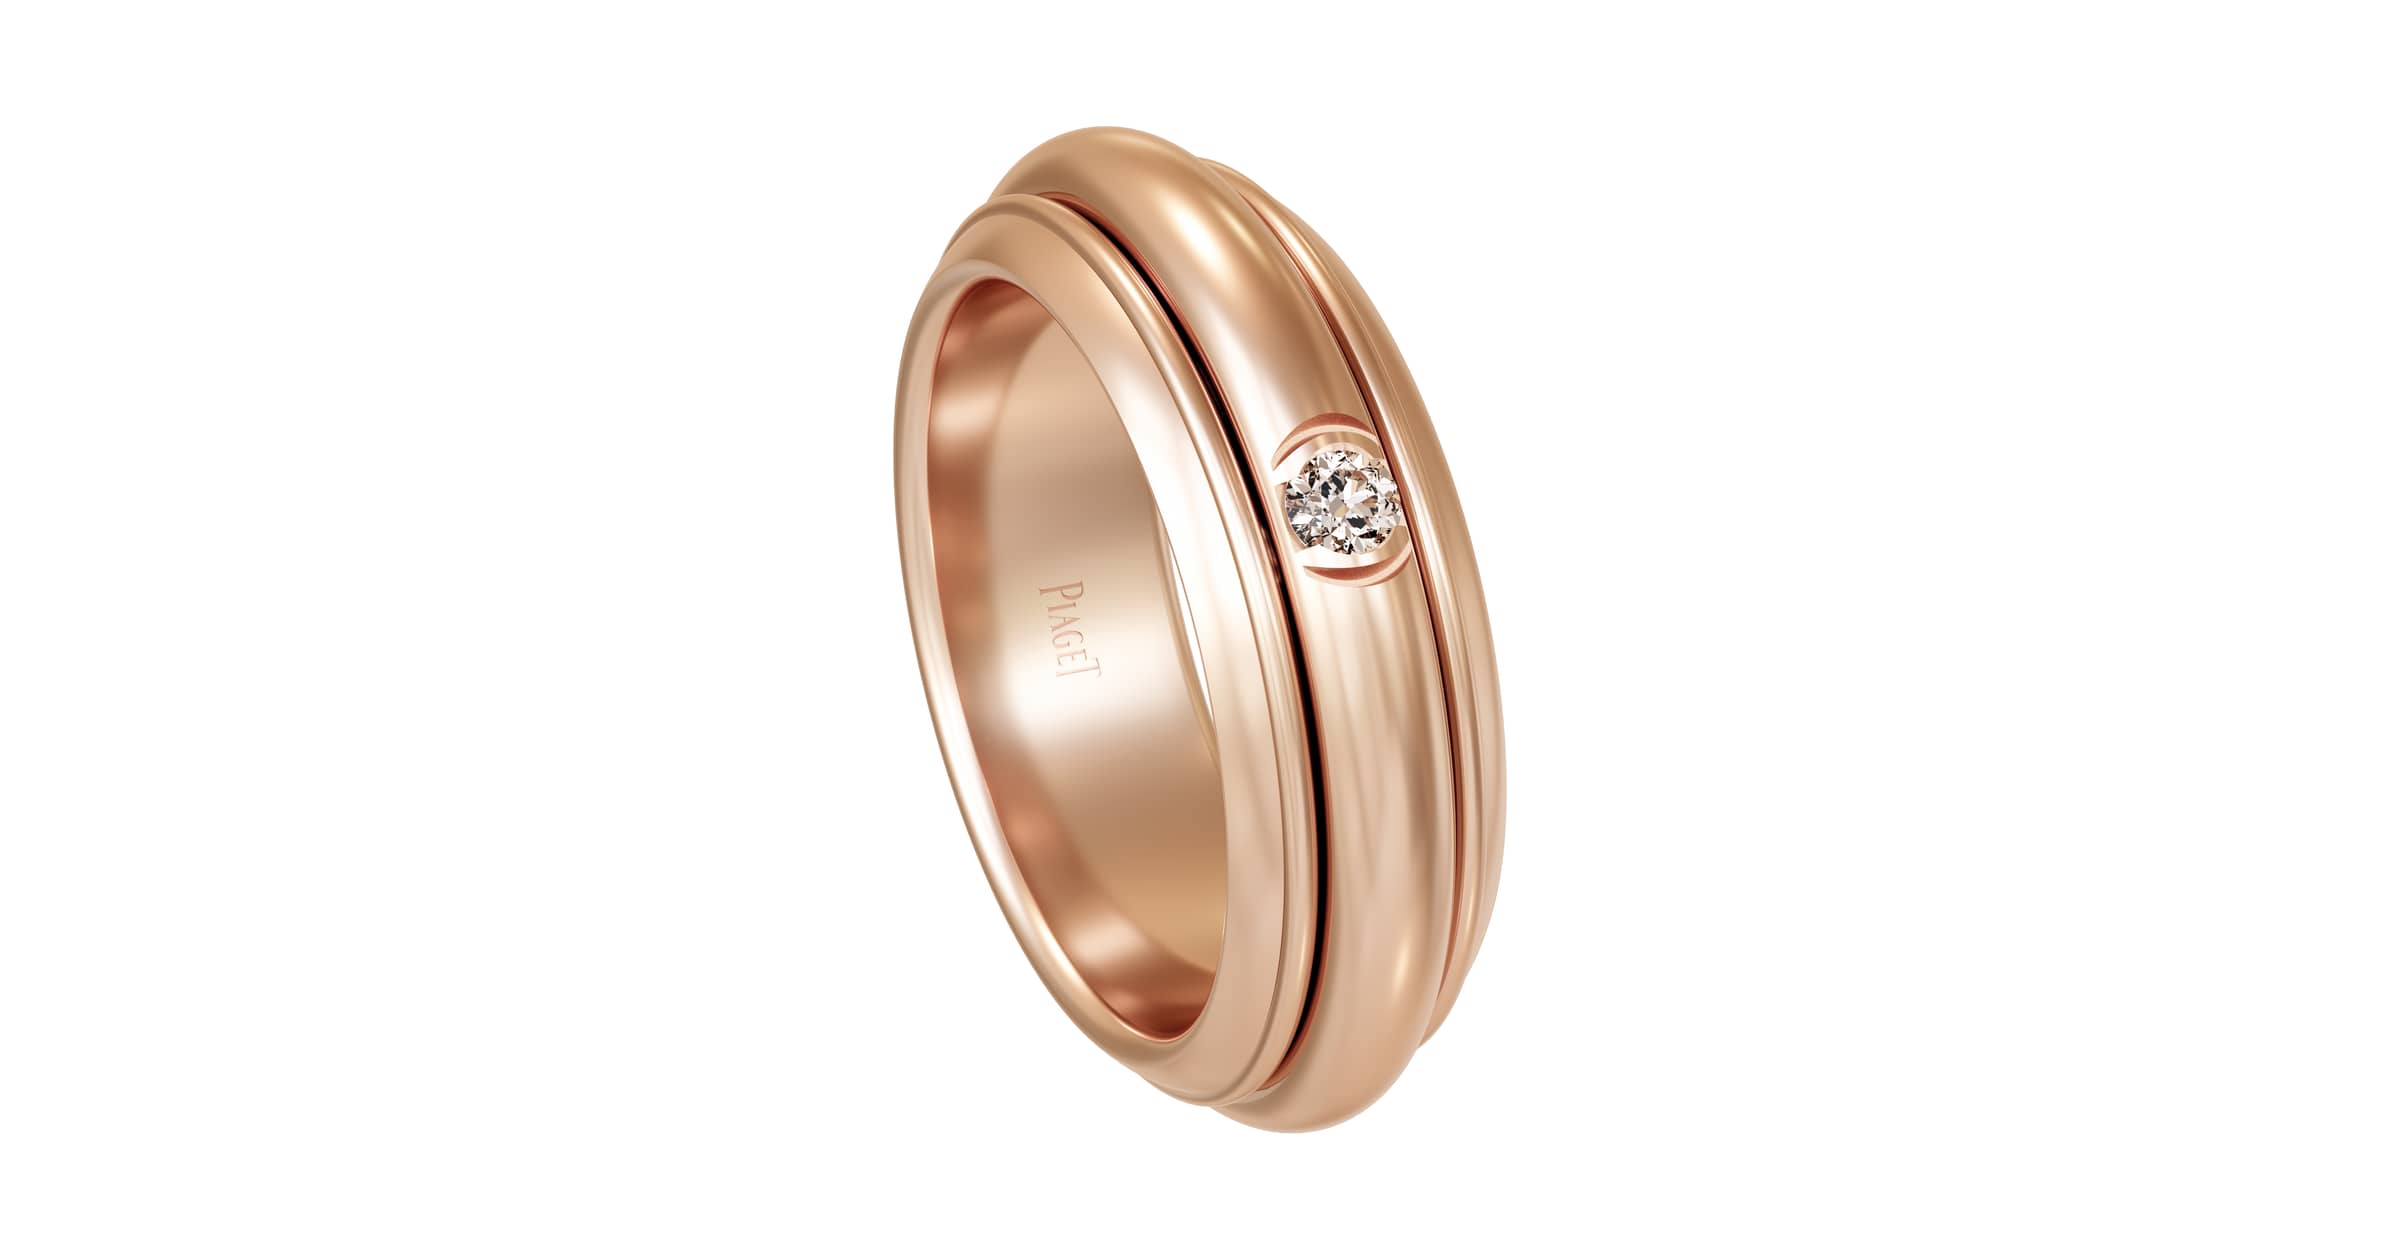 Piaget Diamond & 18k Rose Gold Possession Eternity Ring - 66mint